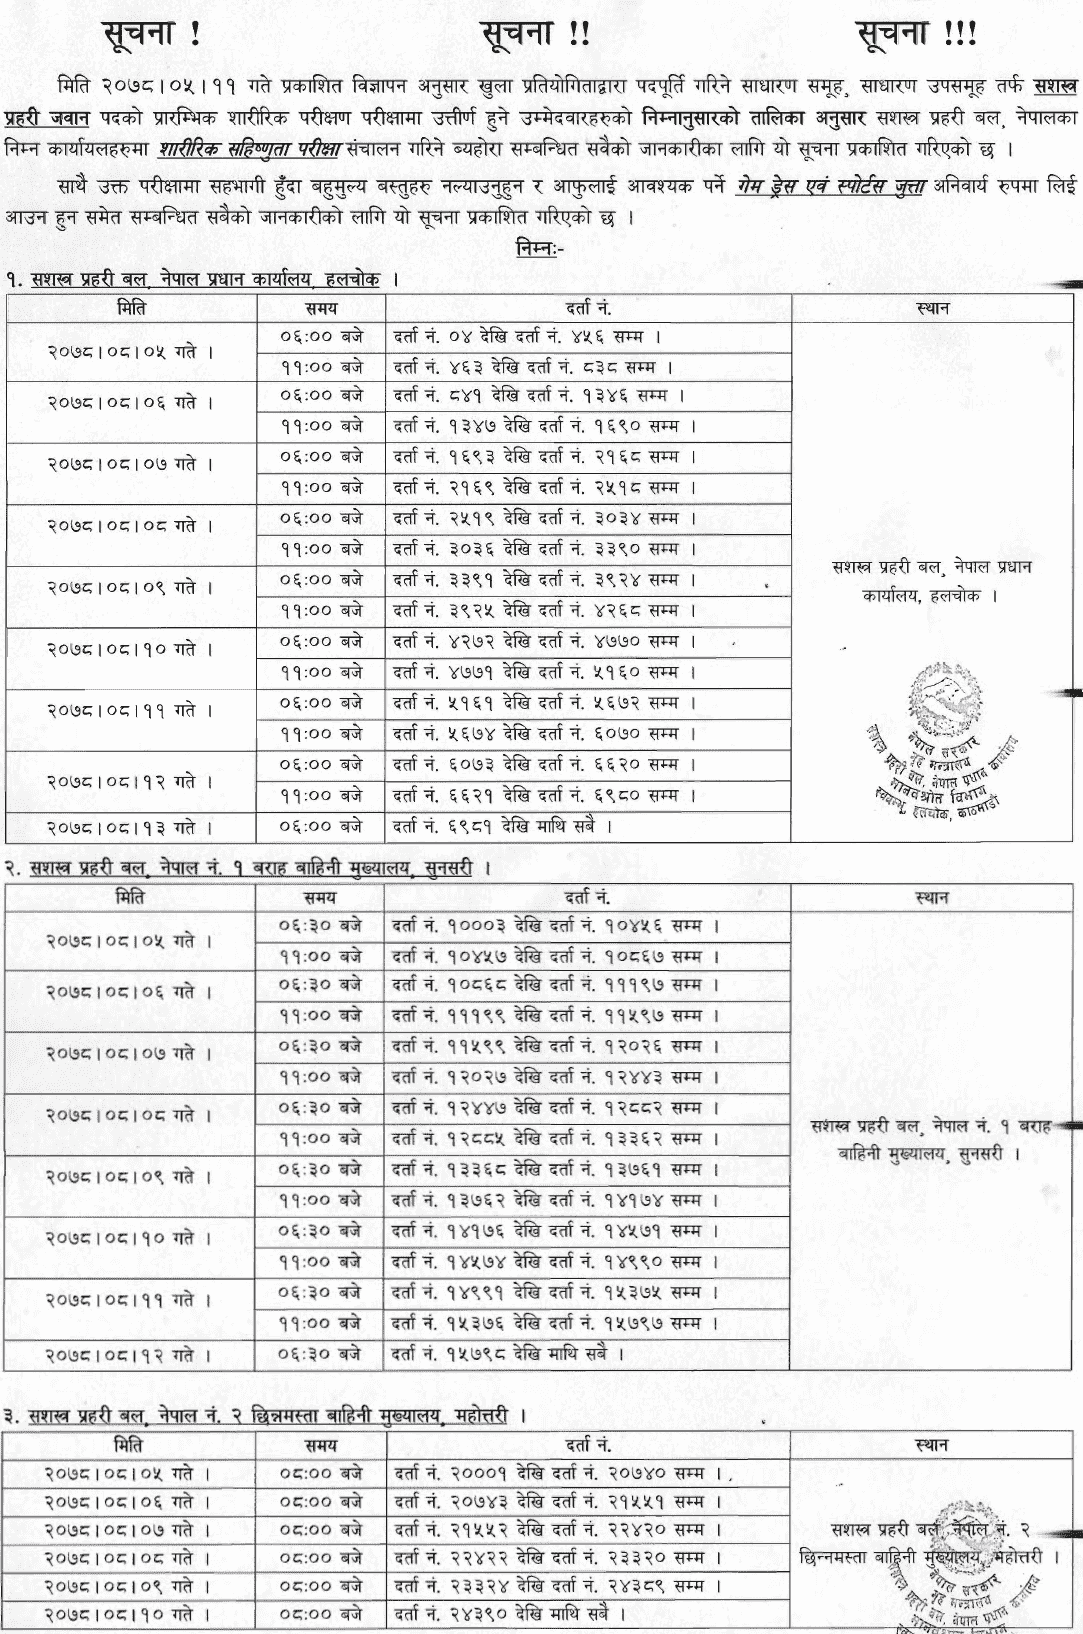 APF Nepal Jawan Post Physical Examination Schedule (Routine)